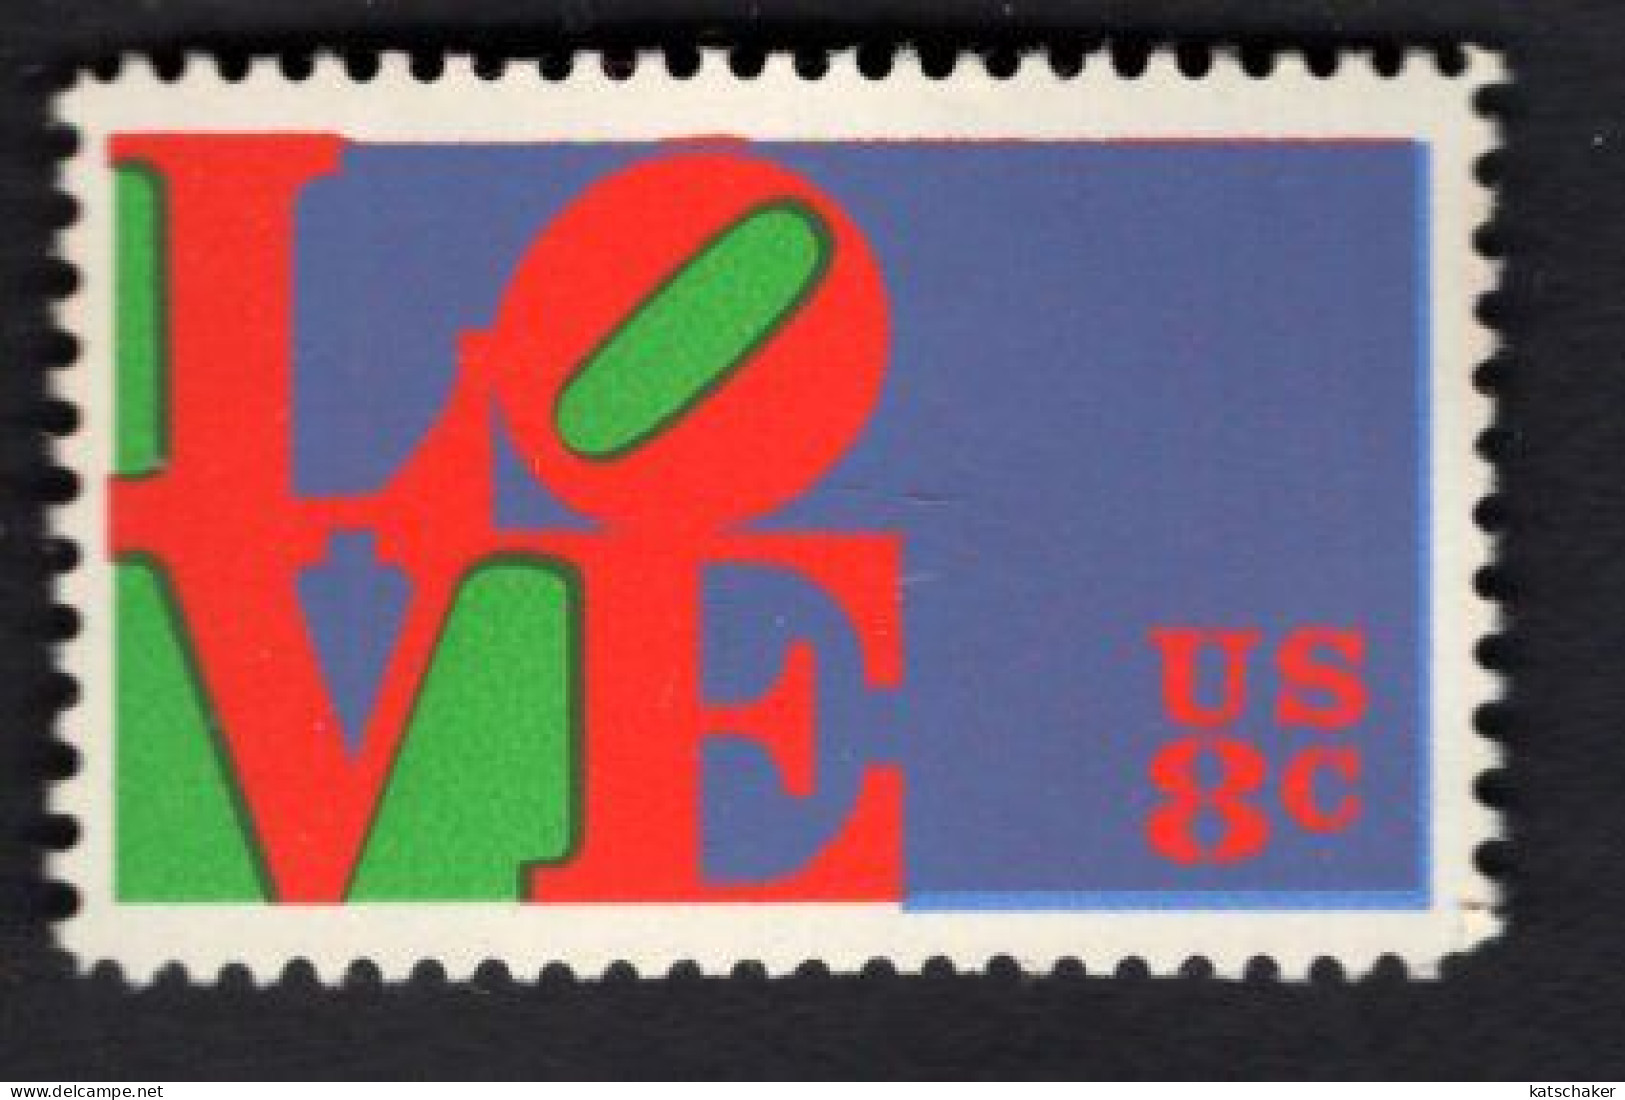 204513573 1972 SCOTT 1475 (XX) POSTFRIS MINT NEVER HINGED - LOVE ISSUE BY ROBERT INDIANA - Ungebraucht